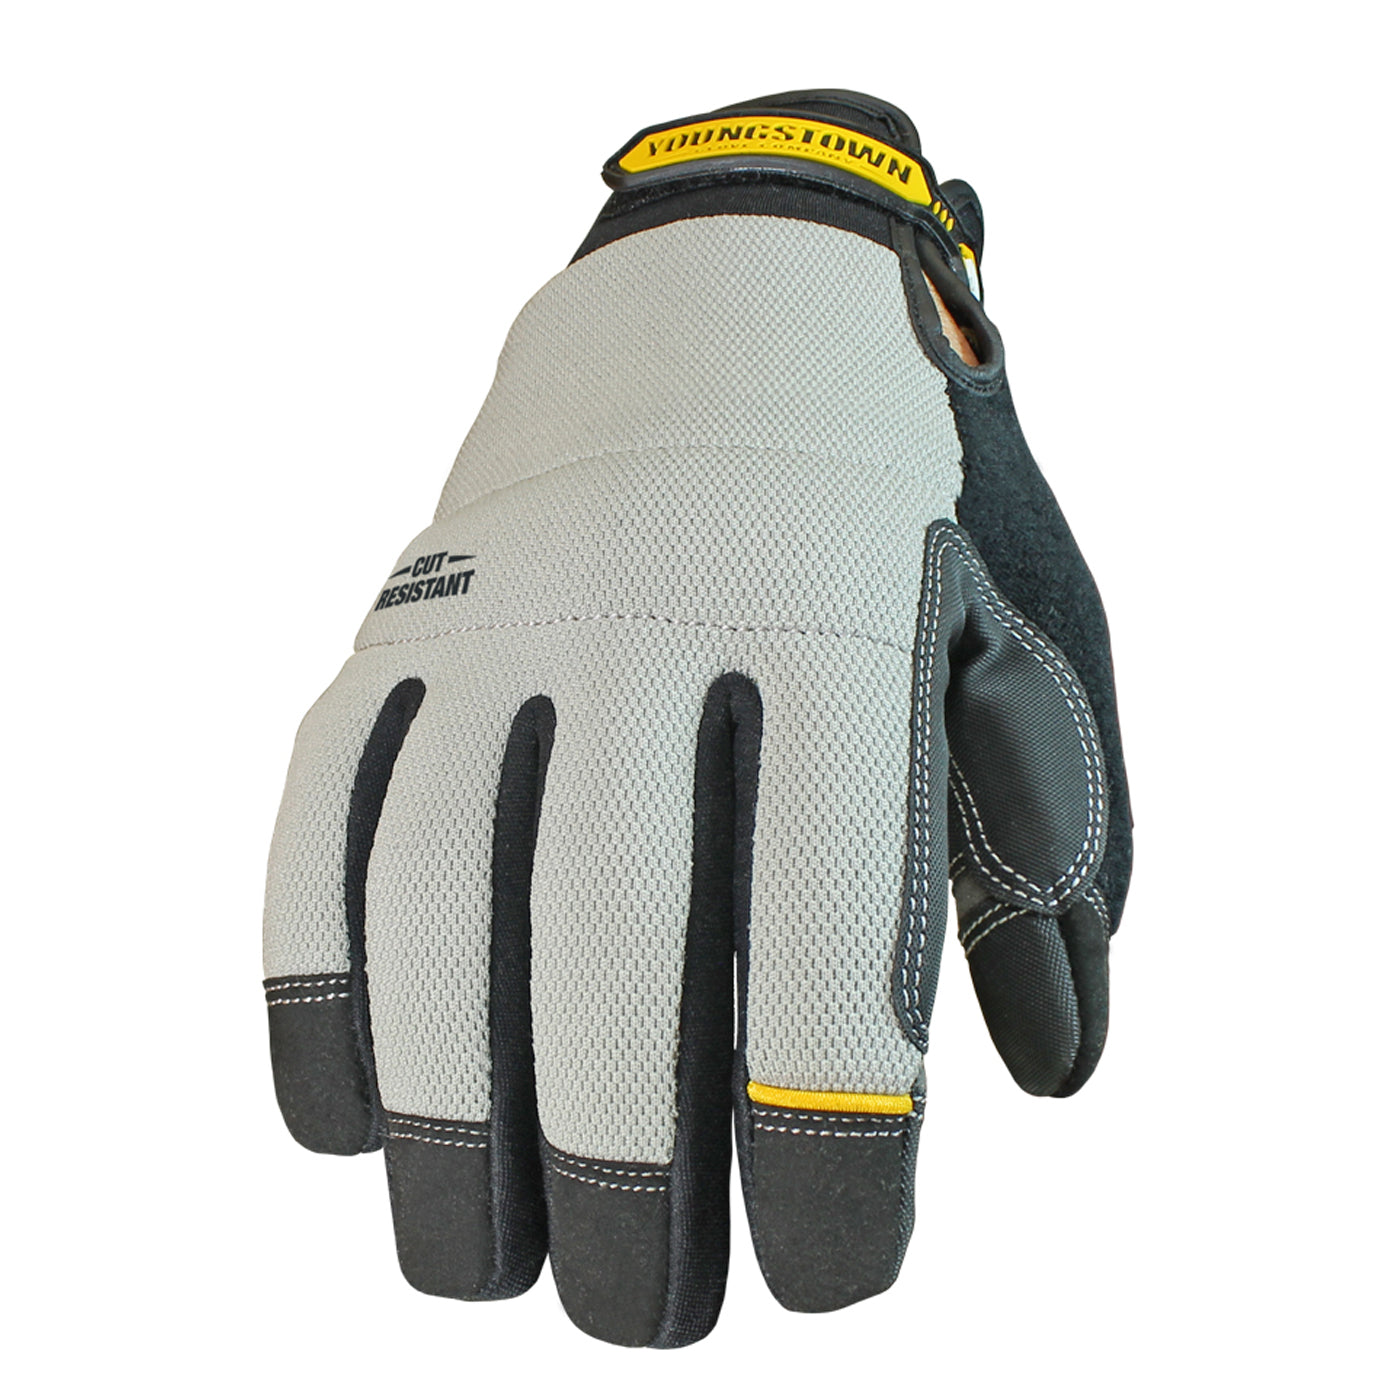 Fastenal Cut Resistant Work Gloves PPE Safety Construction Gardening EN388  4343B